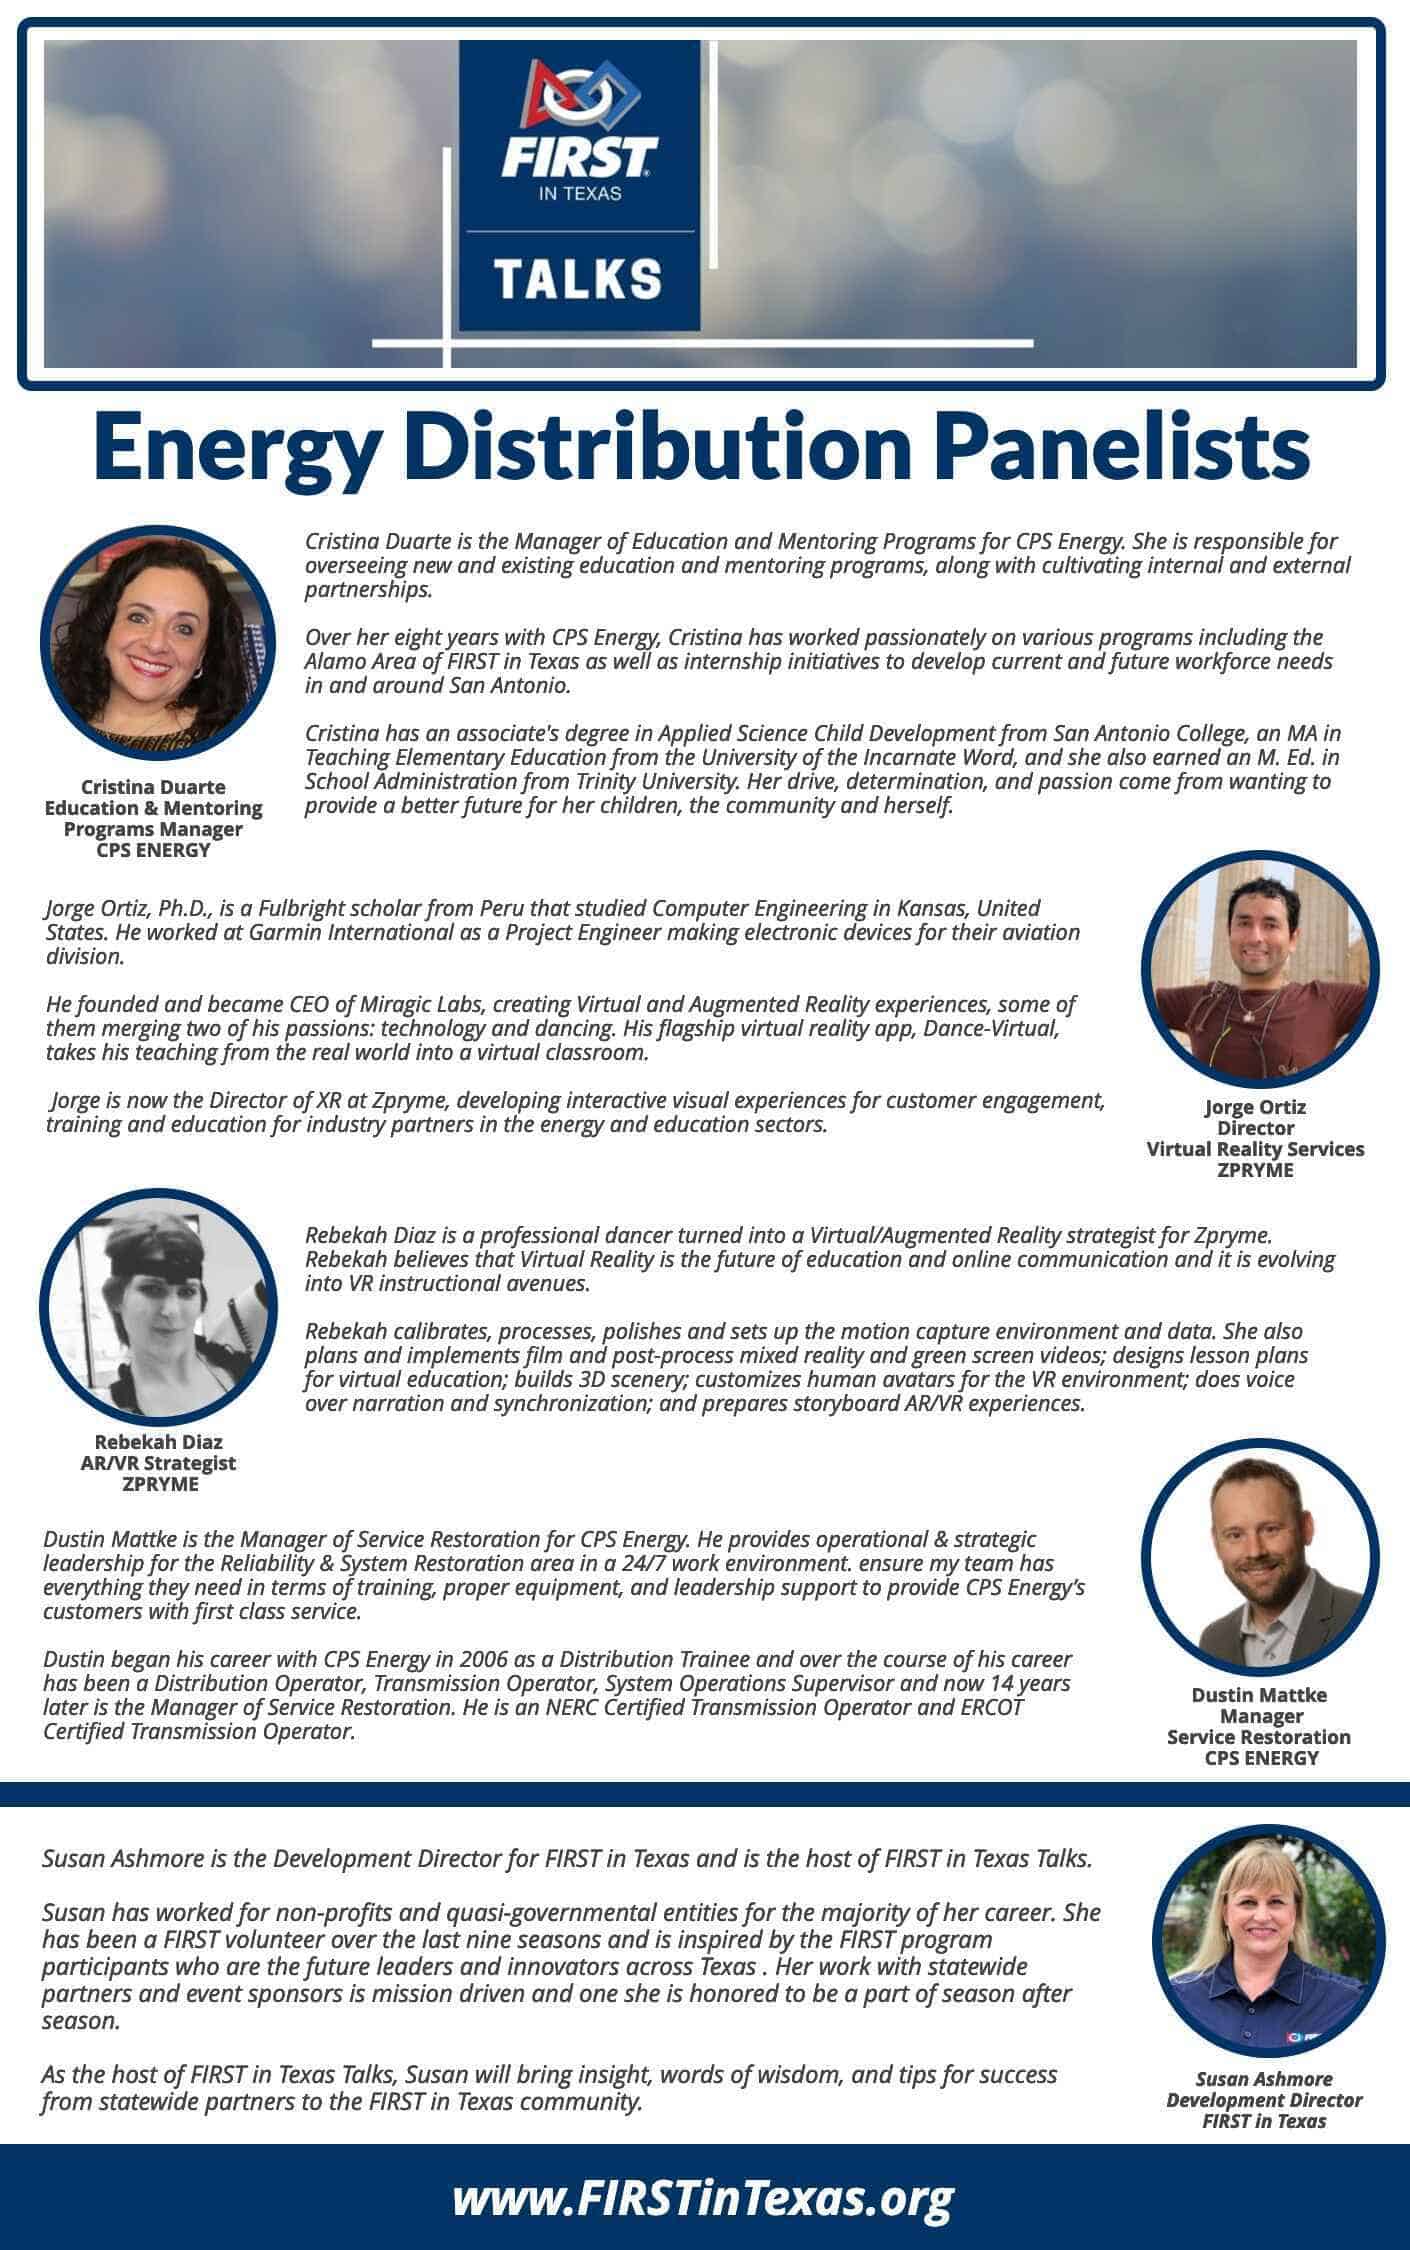 FIRST in Texas Talks - Energy Distribution Panelist Program